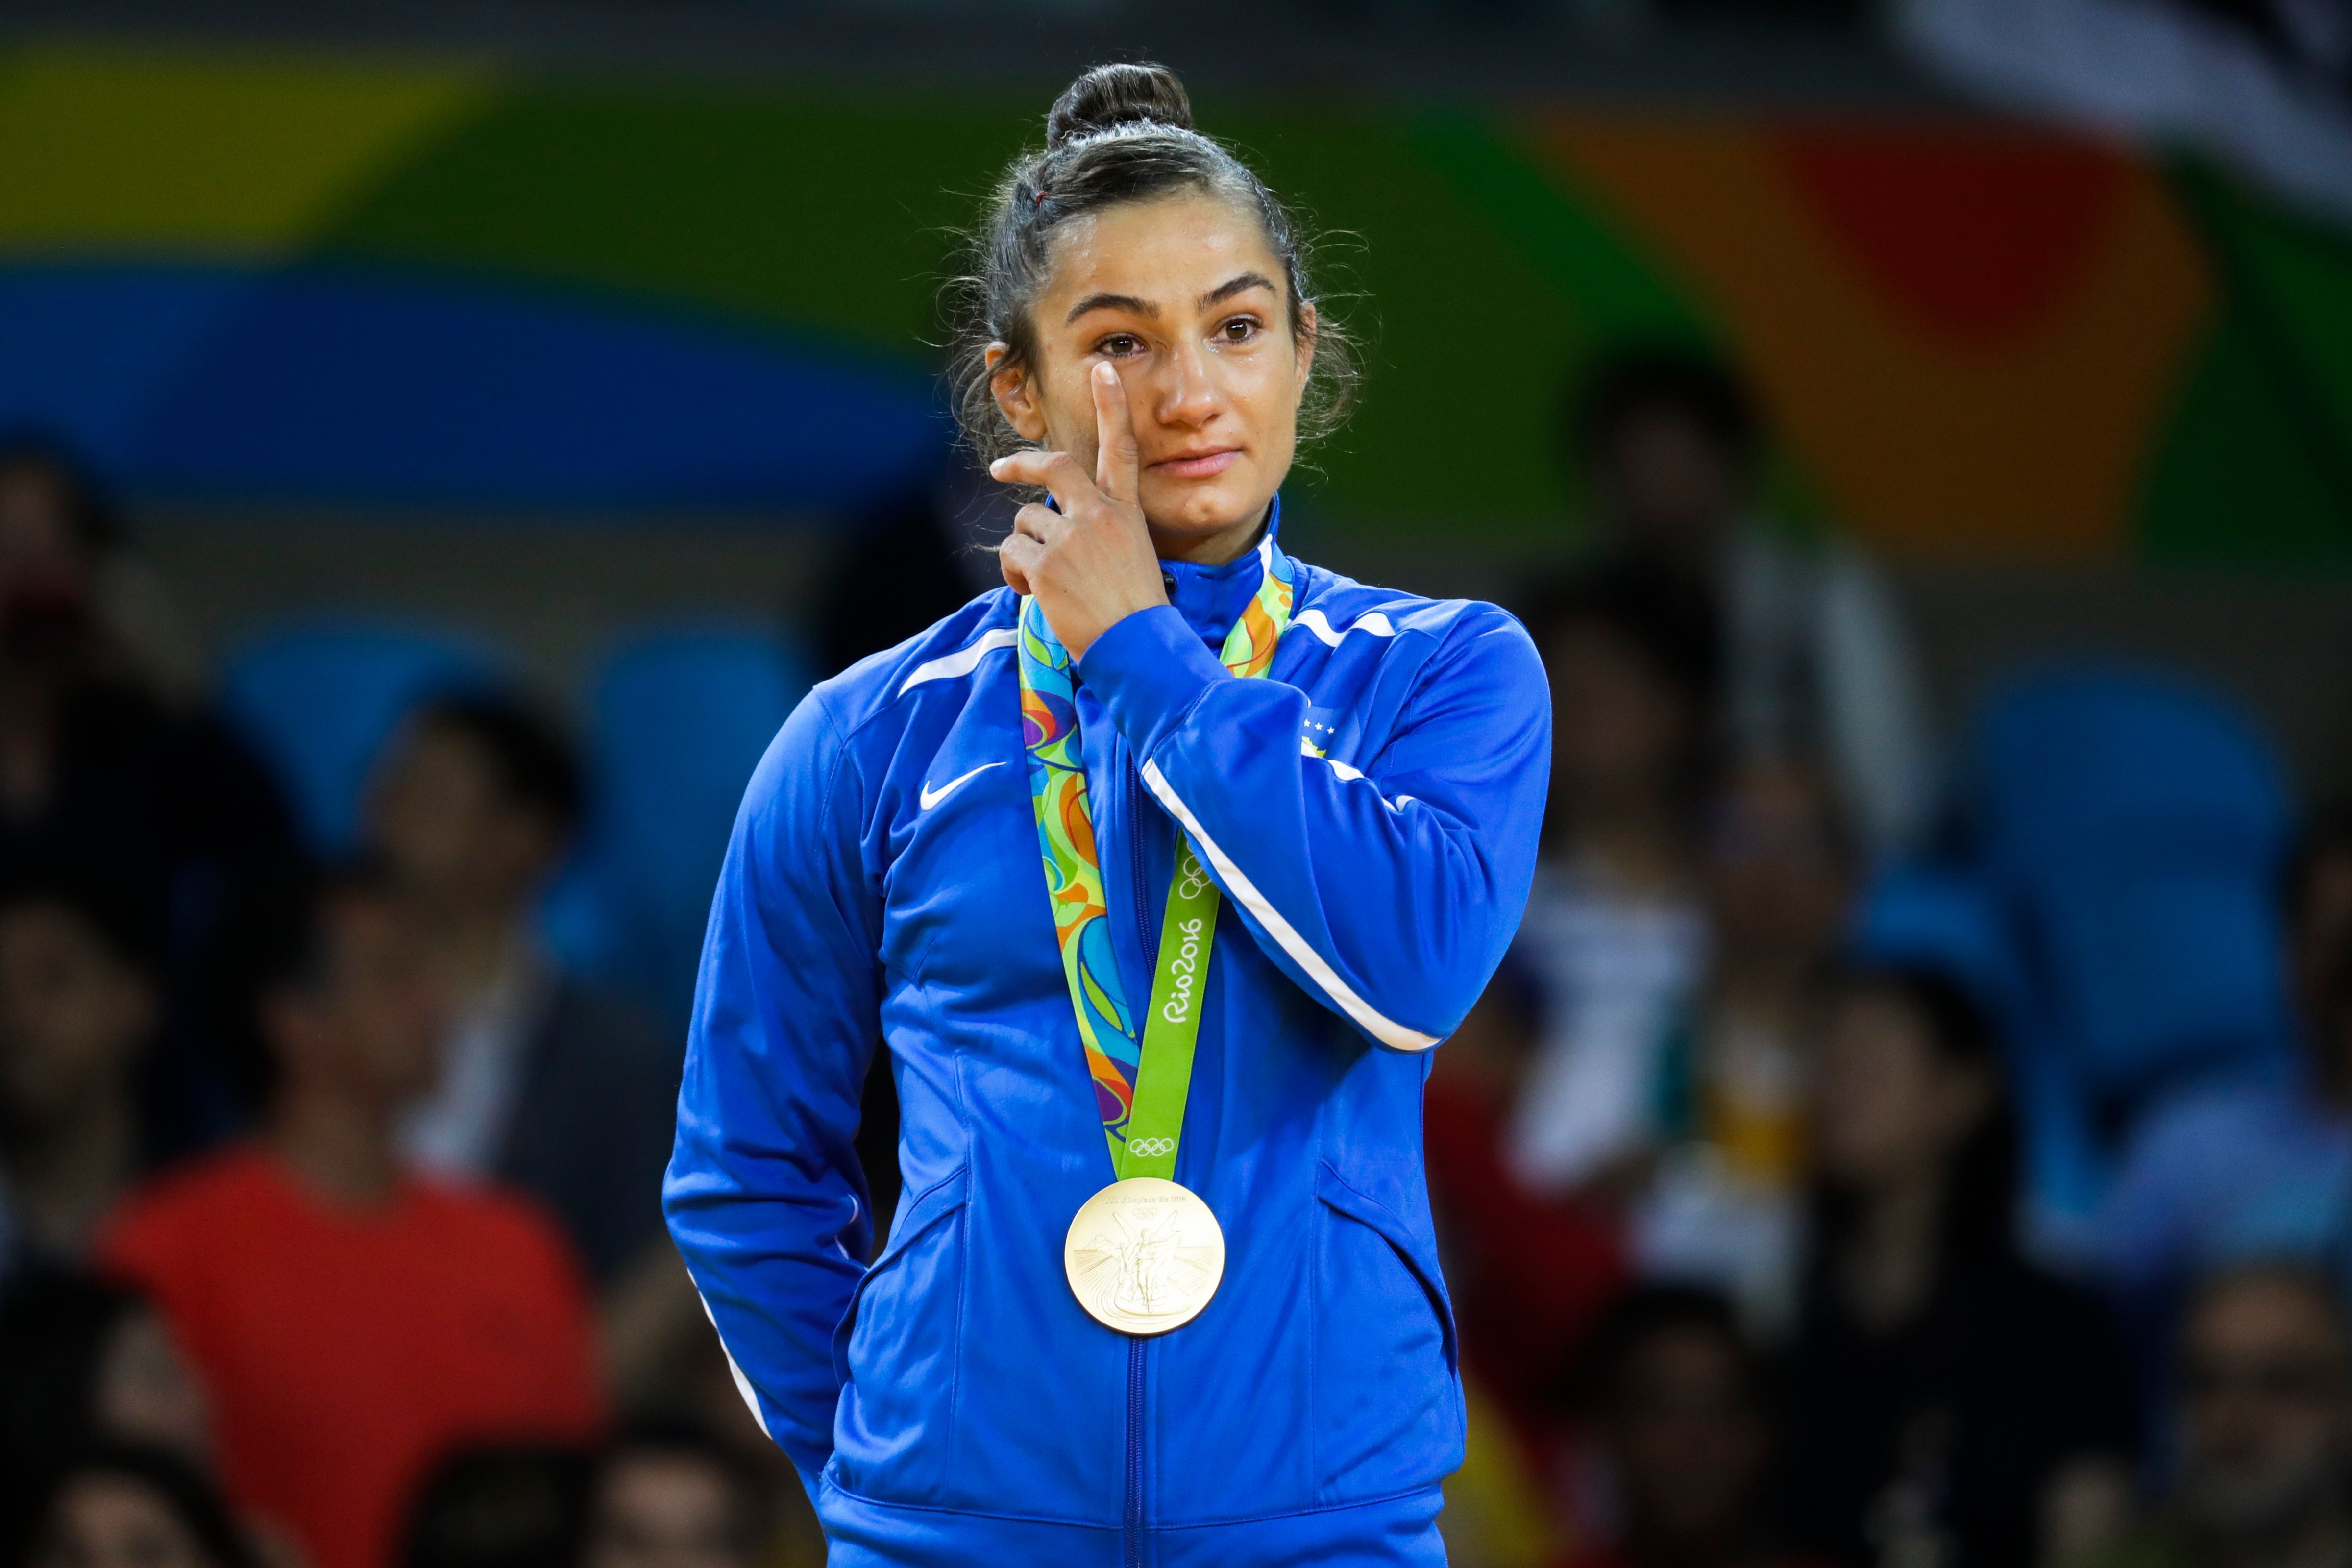 Kosovo's Majlinda Kelmendi receives the gold medal after winning the women's 52-kg judo competition at the 2016 Summer Olympics in Rio de Janeiro, Brazil, Sunday, Aug. 7, 2016. (Markus Schreiber—AP)